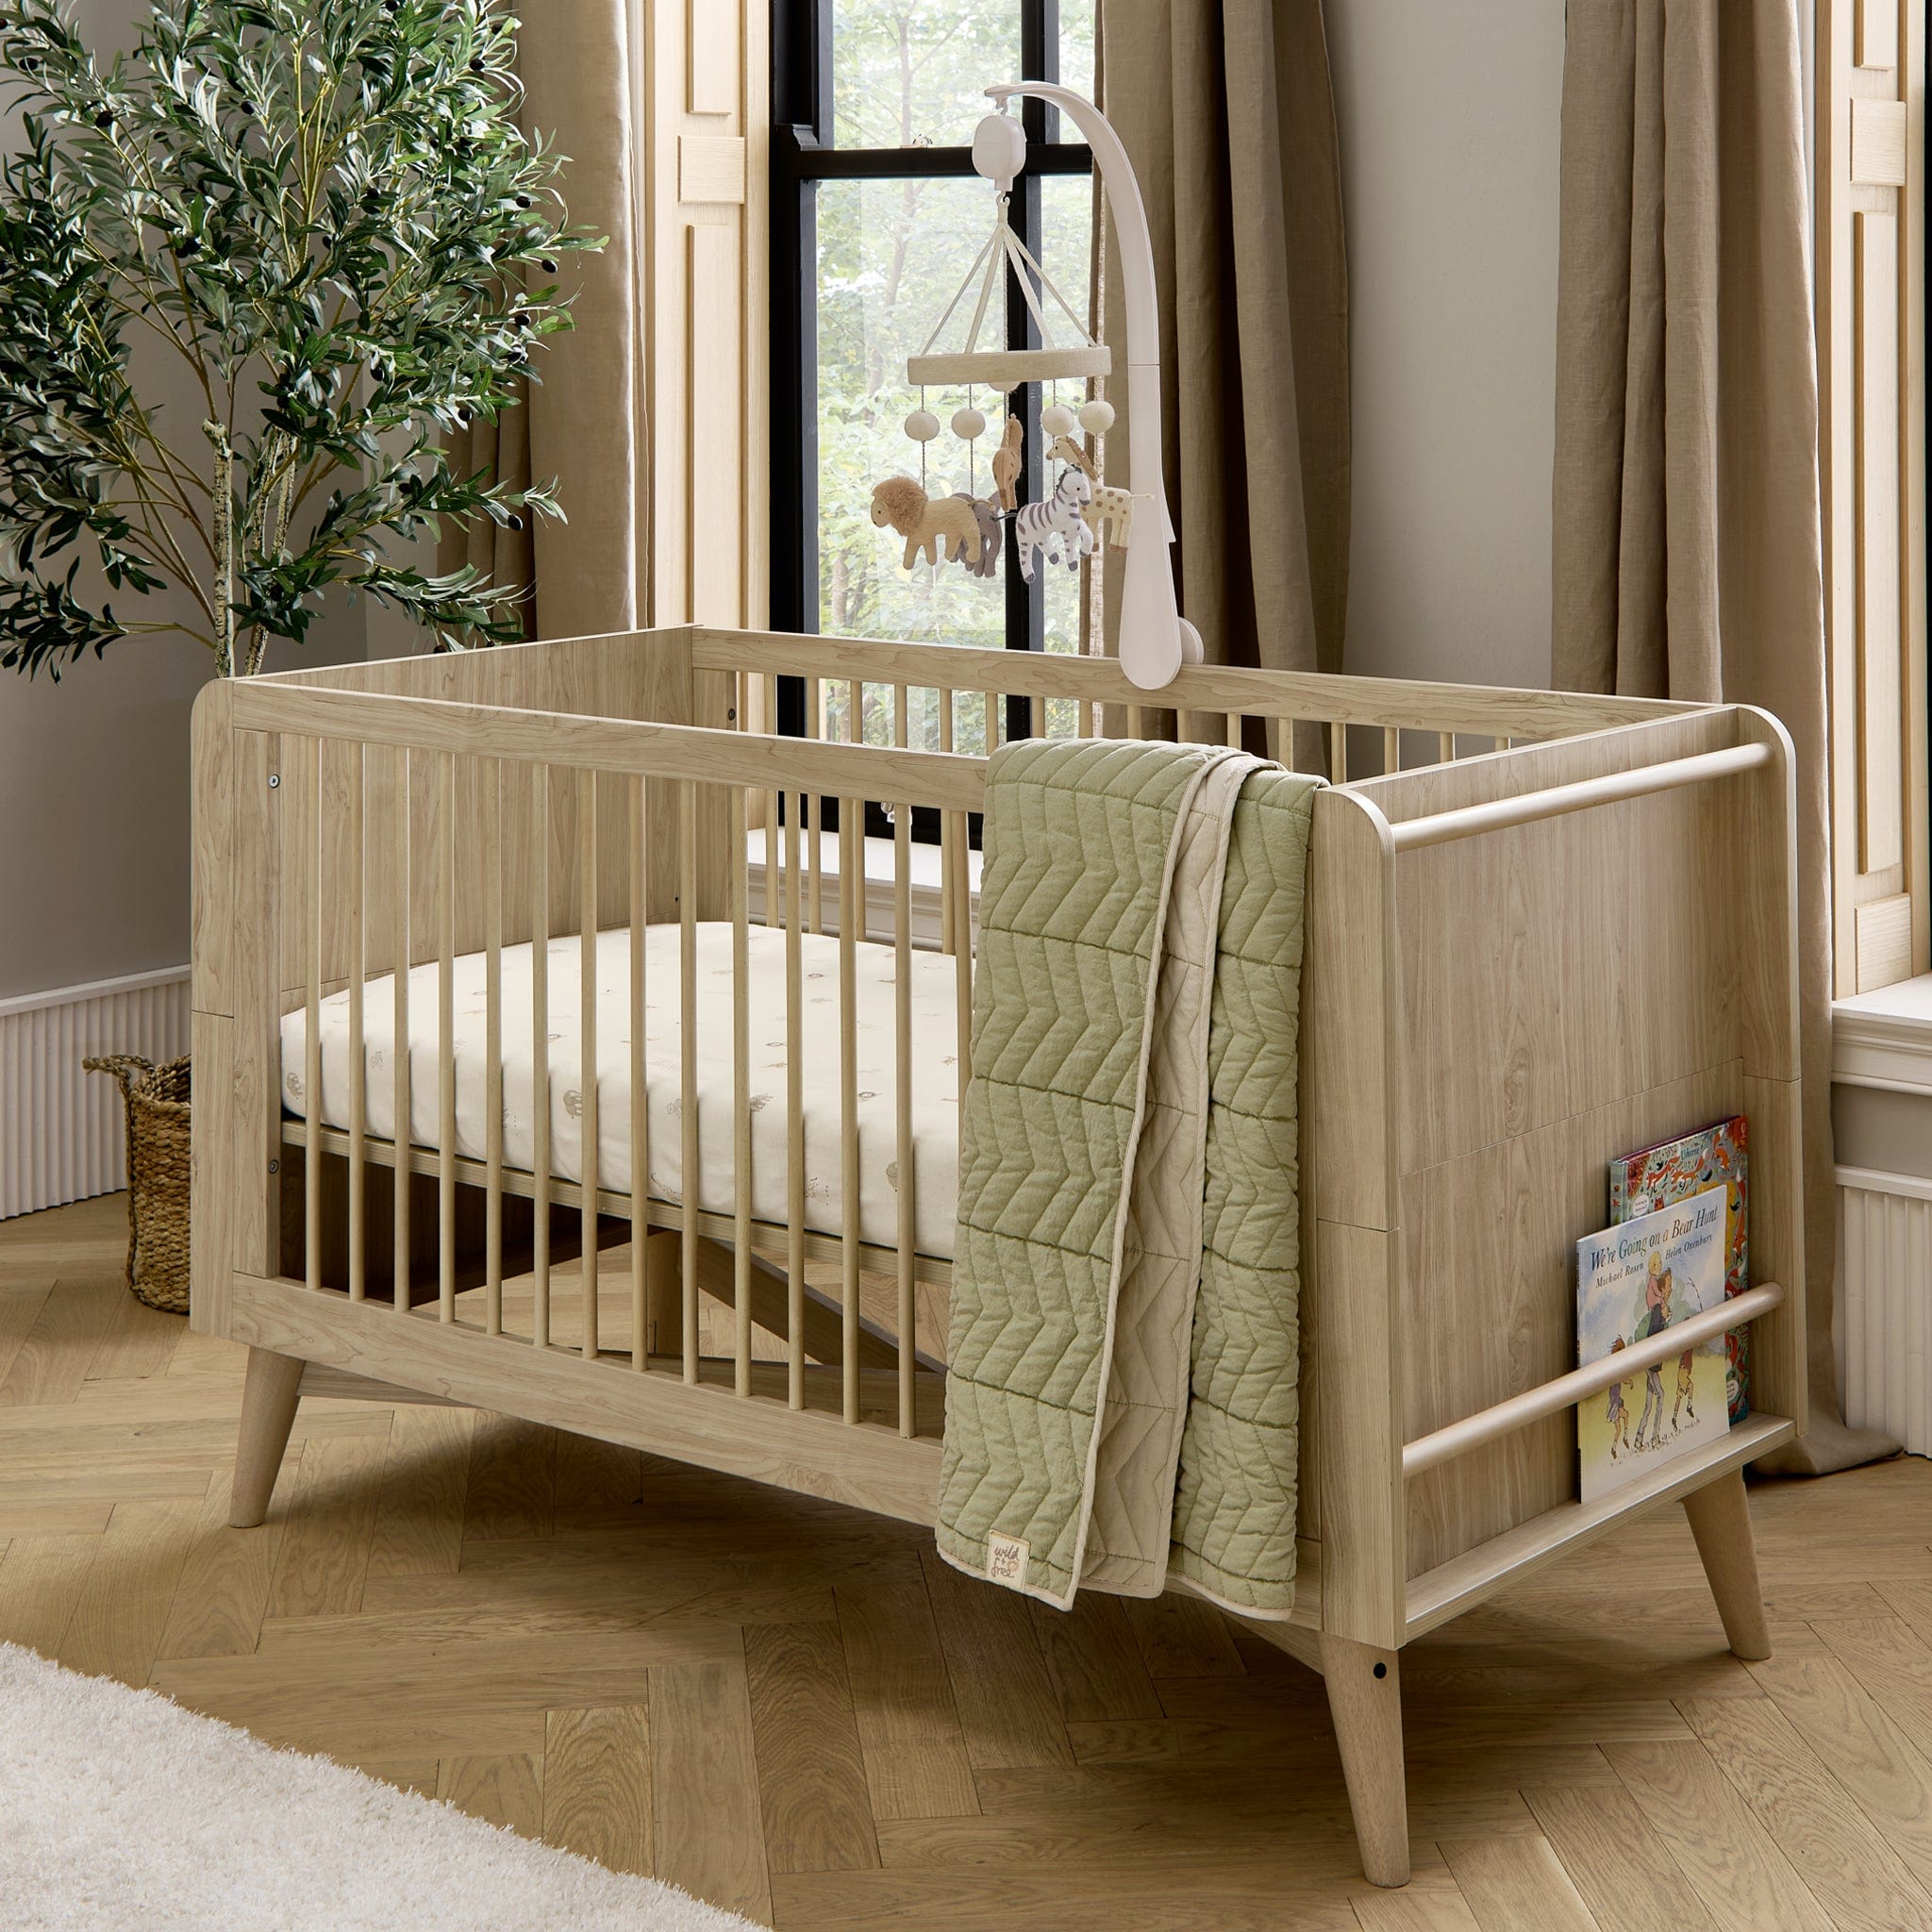 Mamas & Papas cot bed room sets Mamas & Papas Coxley 3 Piece Cotbed Range in Natural/Olive